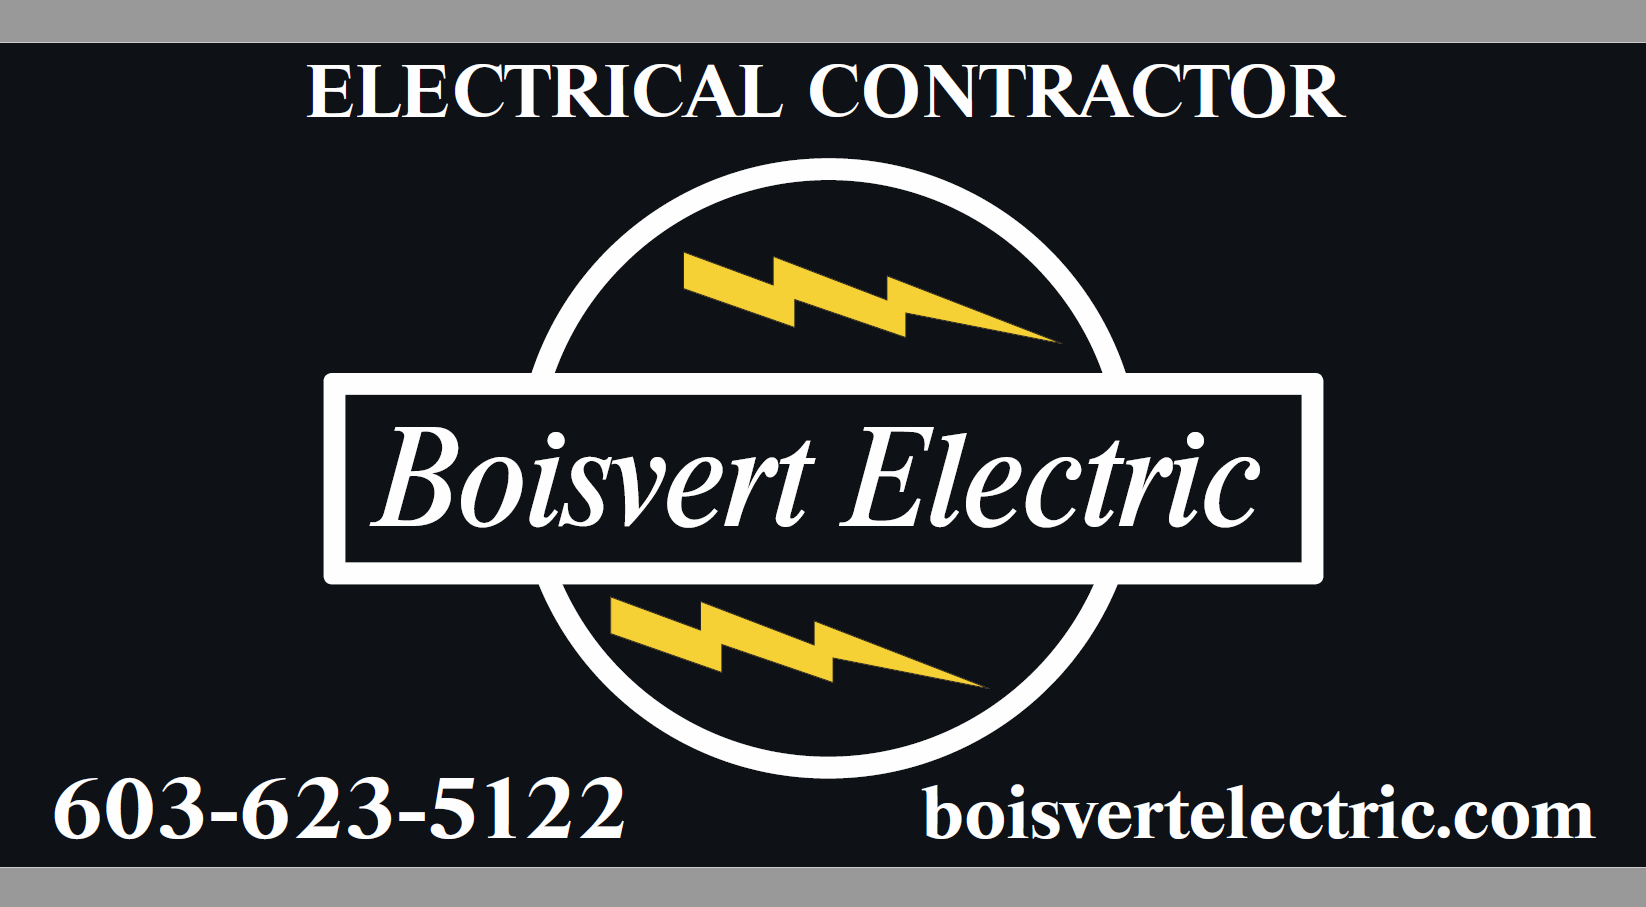 Boisvert Electric